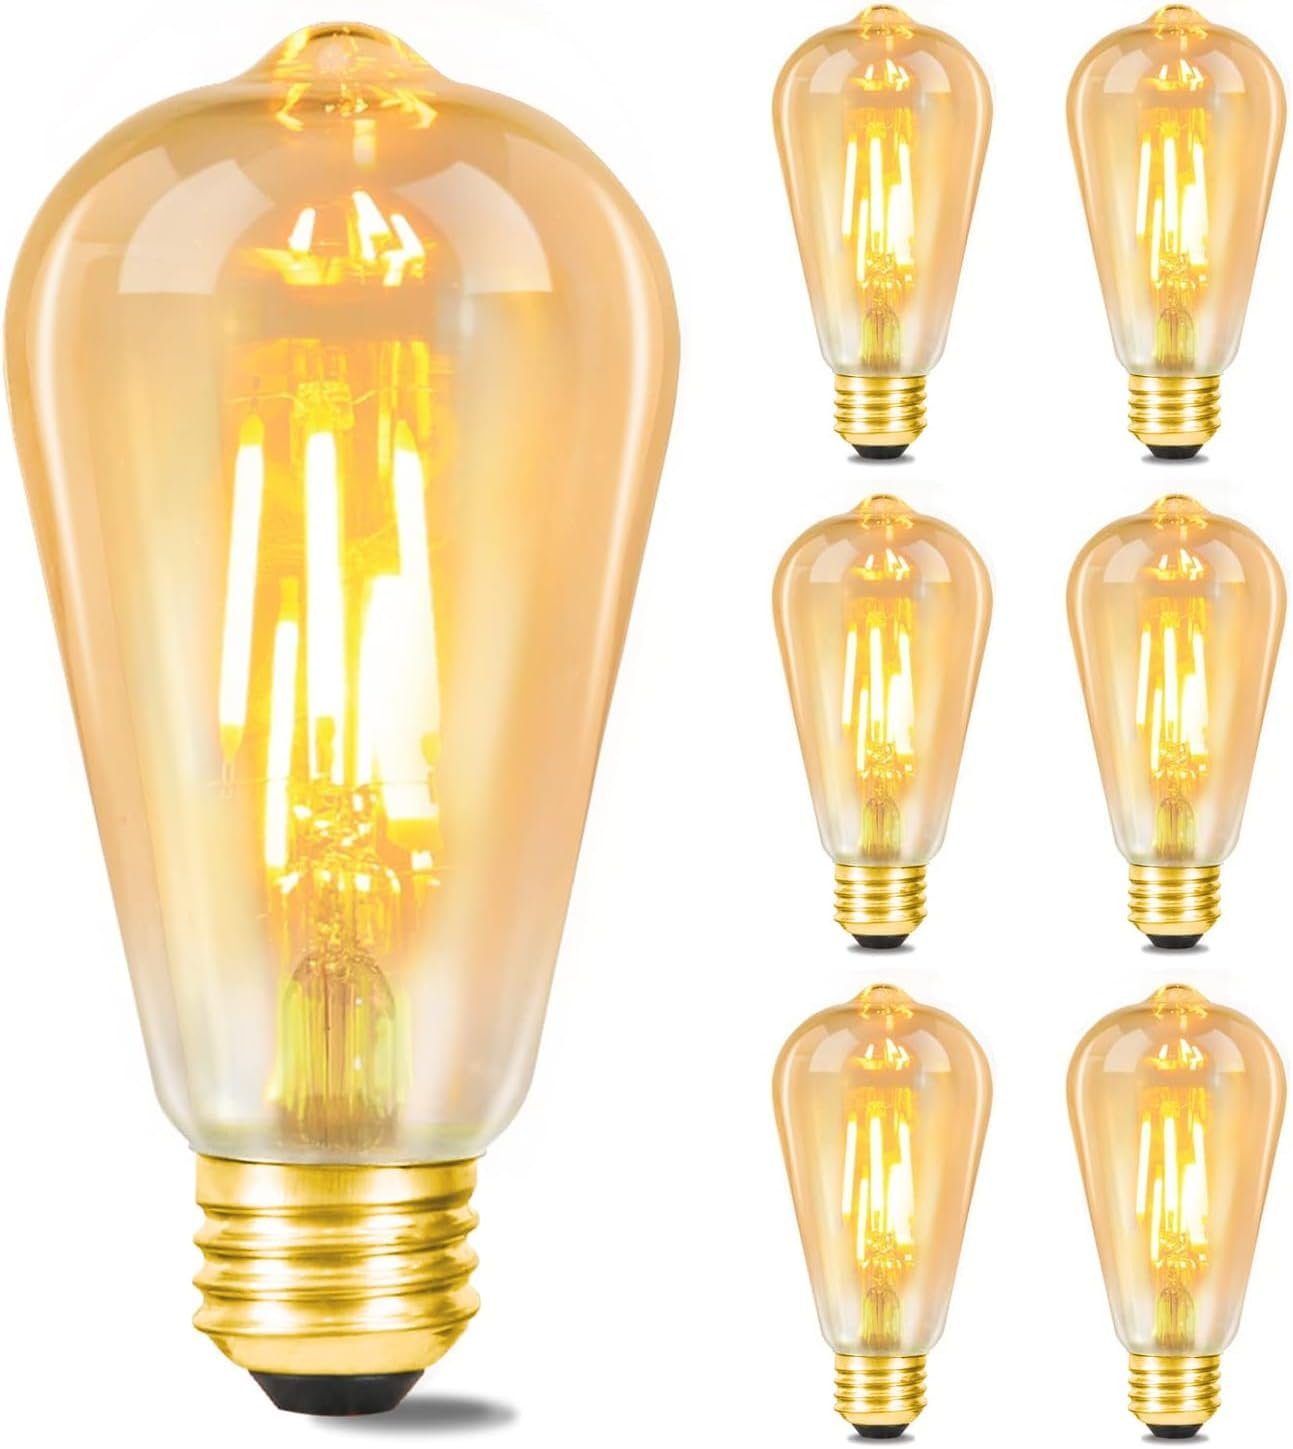 Nettlife LED-Leuchtmittel 6er LED Retro Glühlampe E27 Edison Glühbirne 4W Antike LED Filament, E27, 6 St., Warmweiß, für Nostalgie & Retro Beleuchtung im Haus Café Restaurant Braun